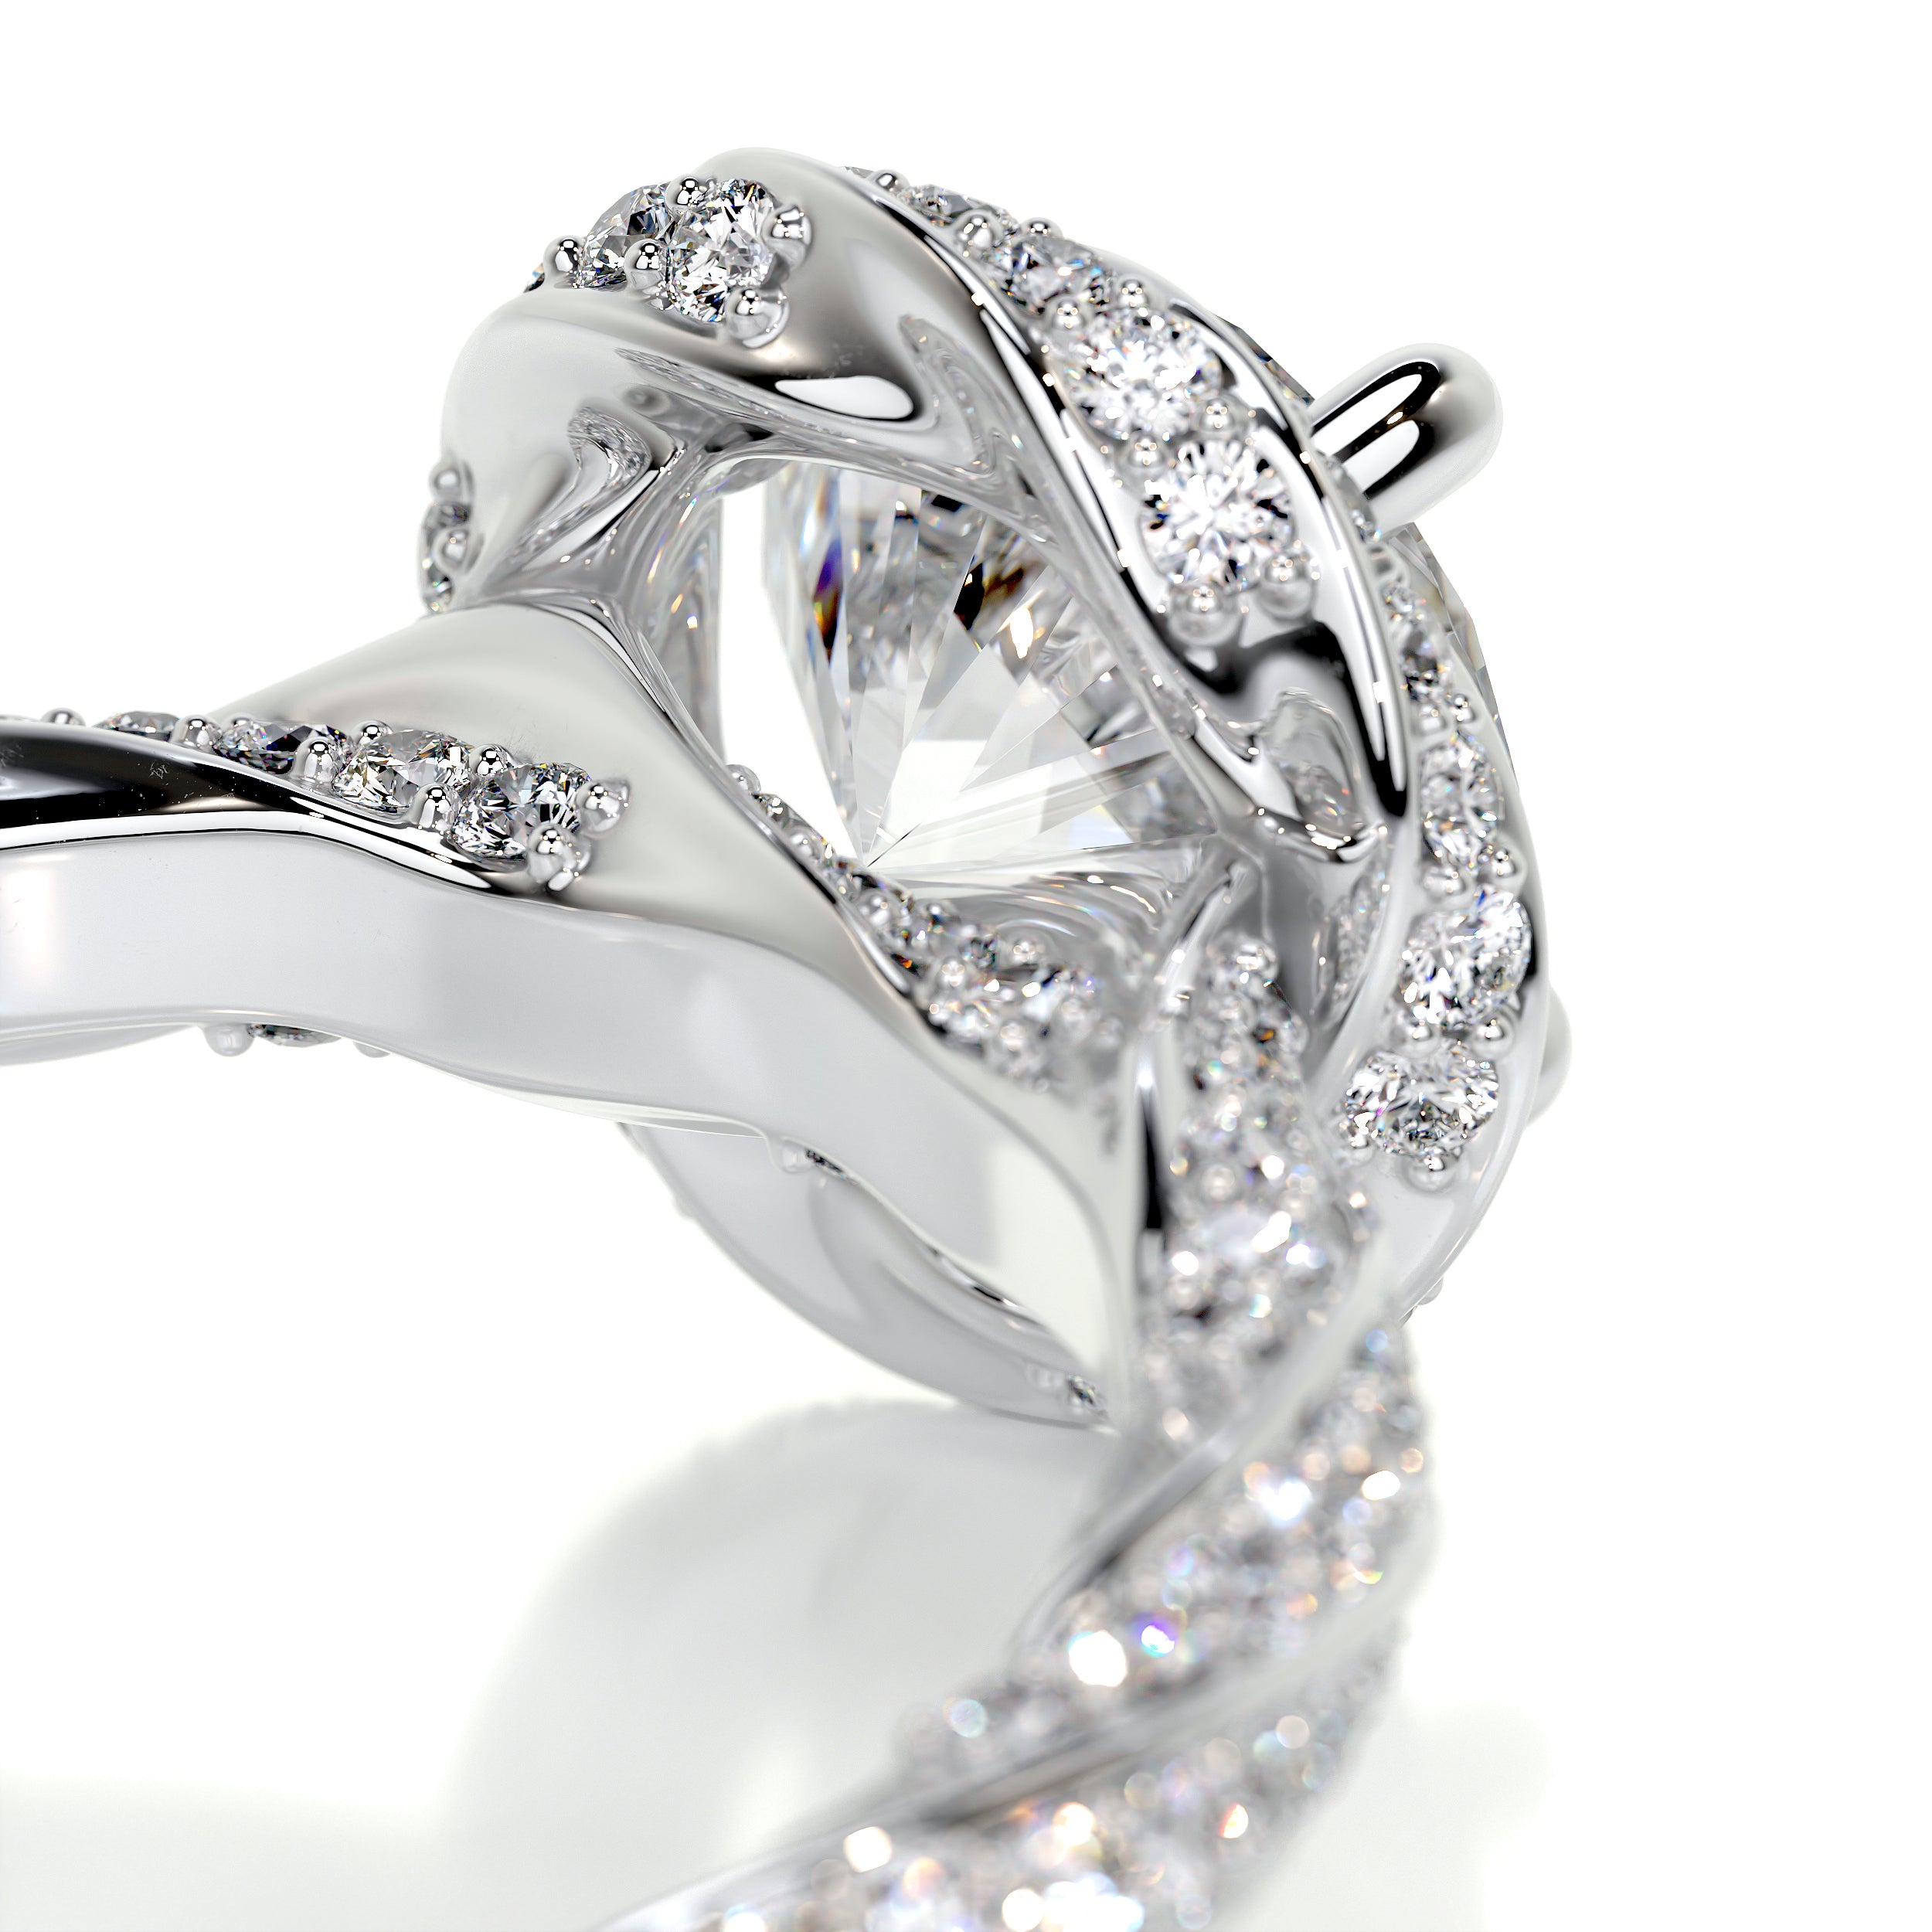 Joanne Diamond Engagement Ring   (1.50 Carat) -Platinum